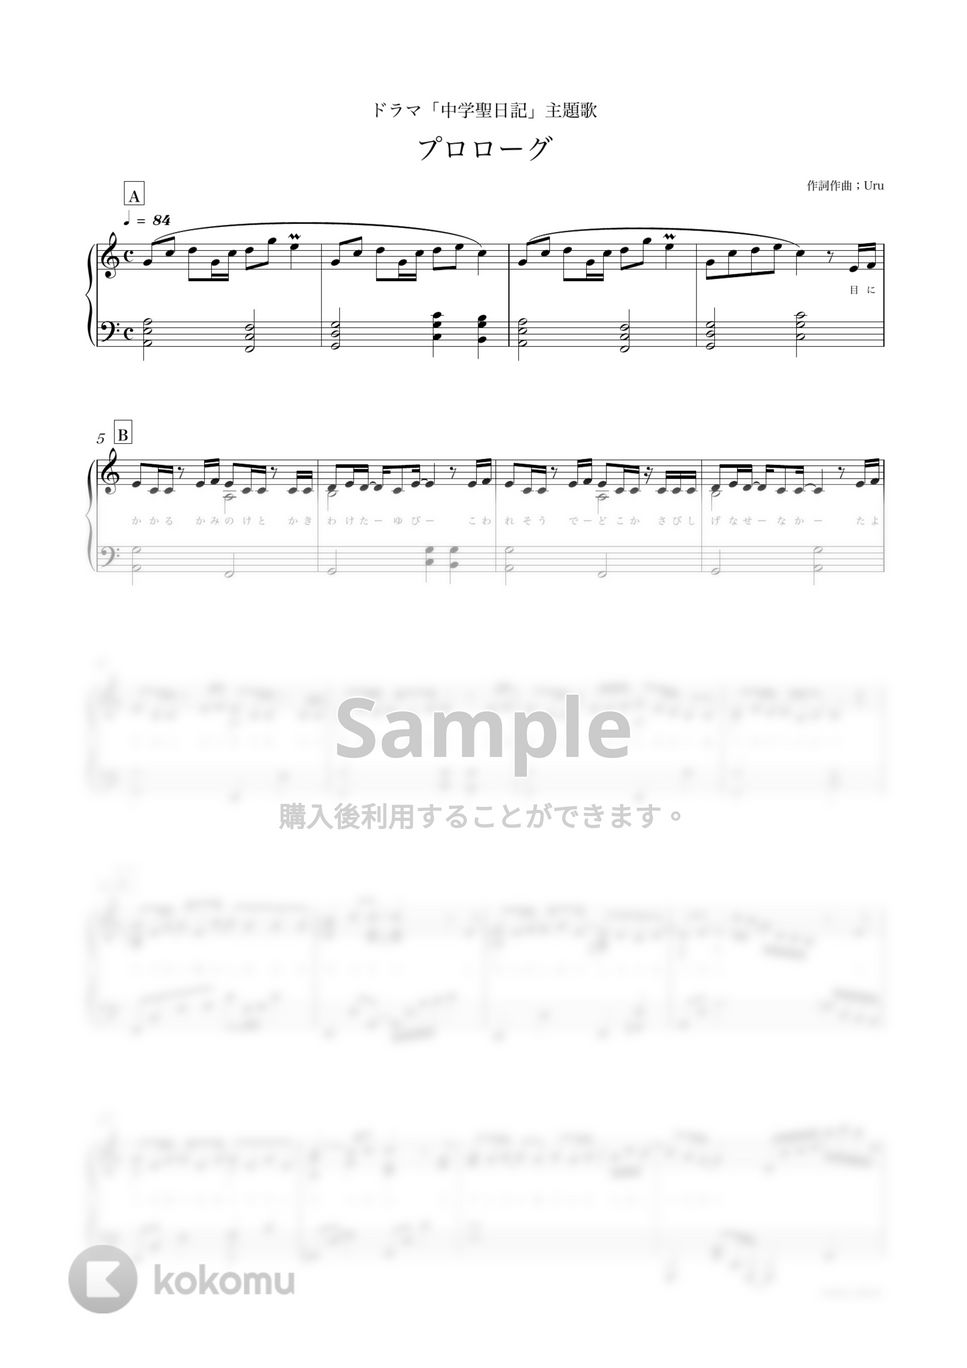 Uru - プロローグ (『中学聖日記』主題歌) by sammy